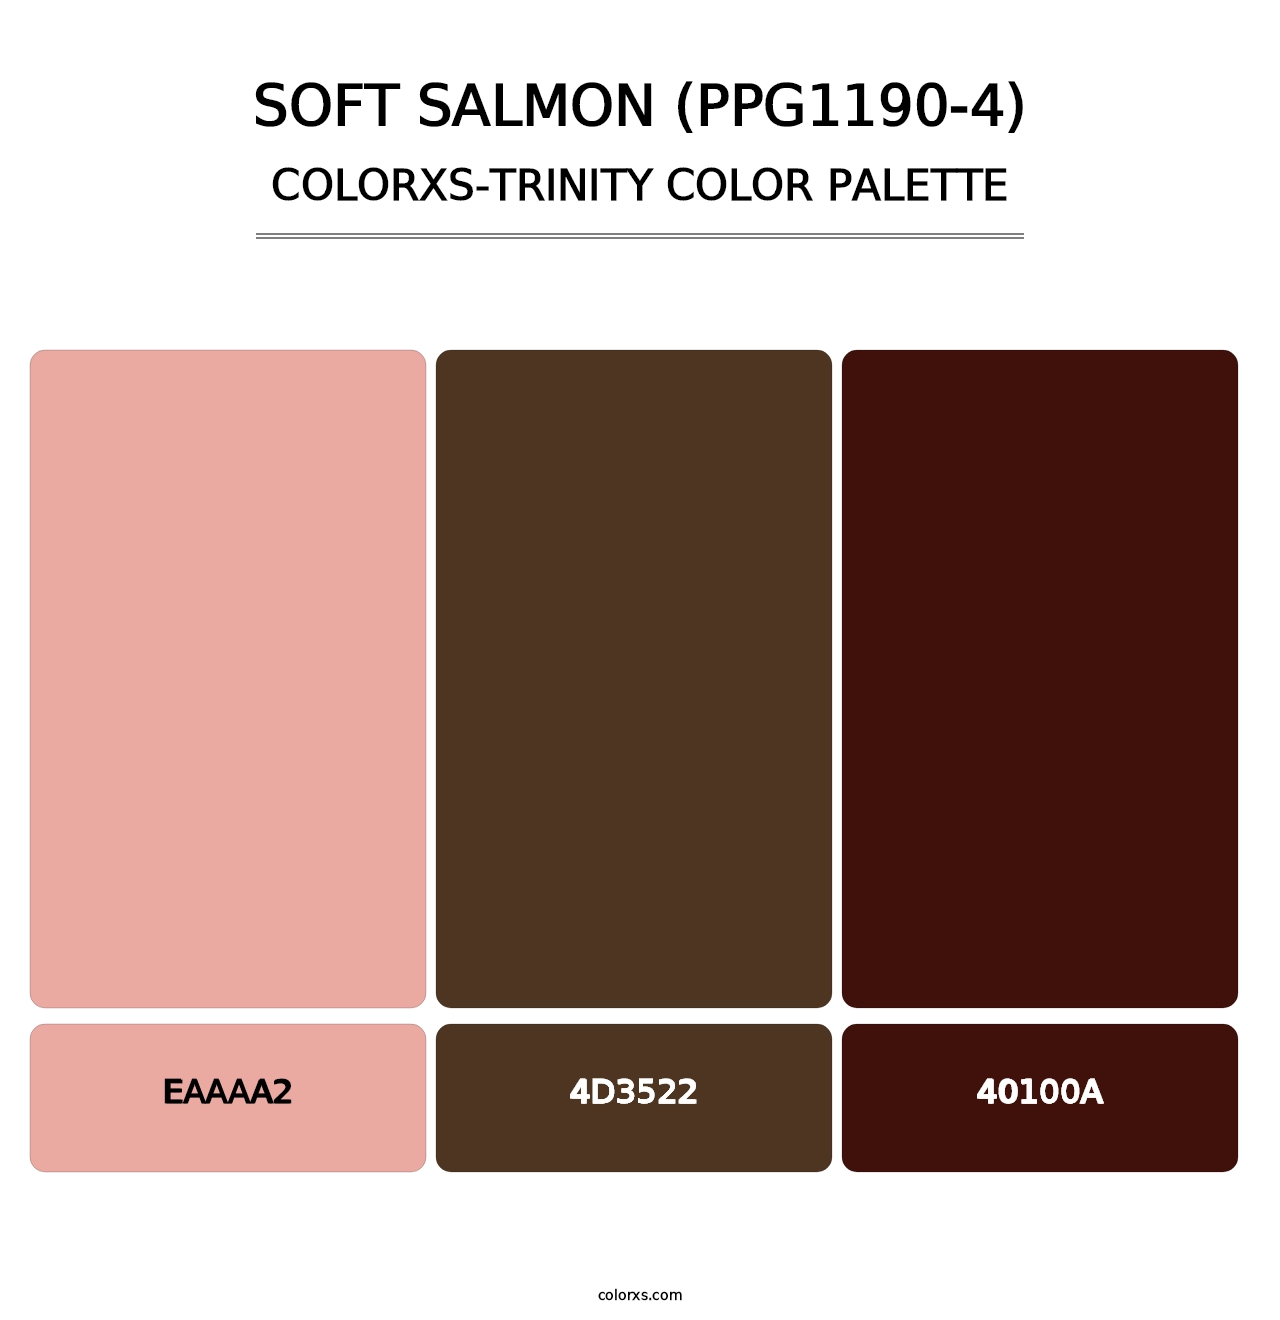 Soft Salmon (PPG1190-4) - Colorxs Trinity Palette